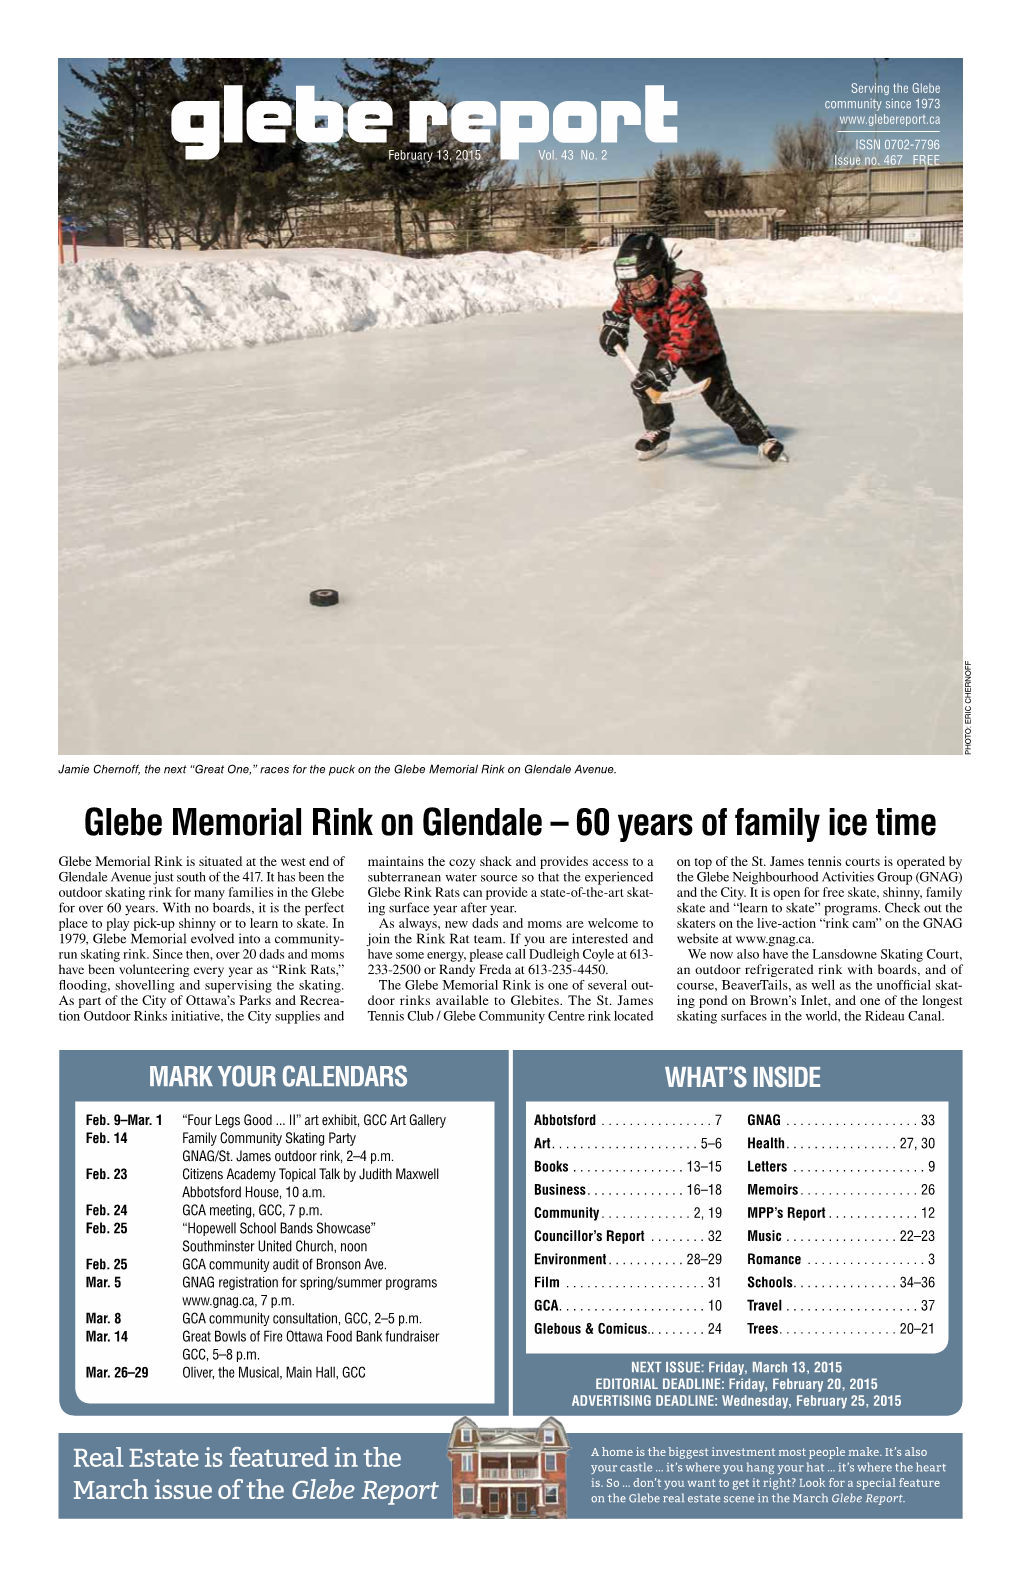 Glebe Memorial Rink on Glendale – 60 Years of Family Ice Time